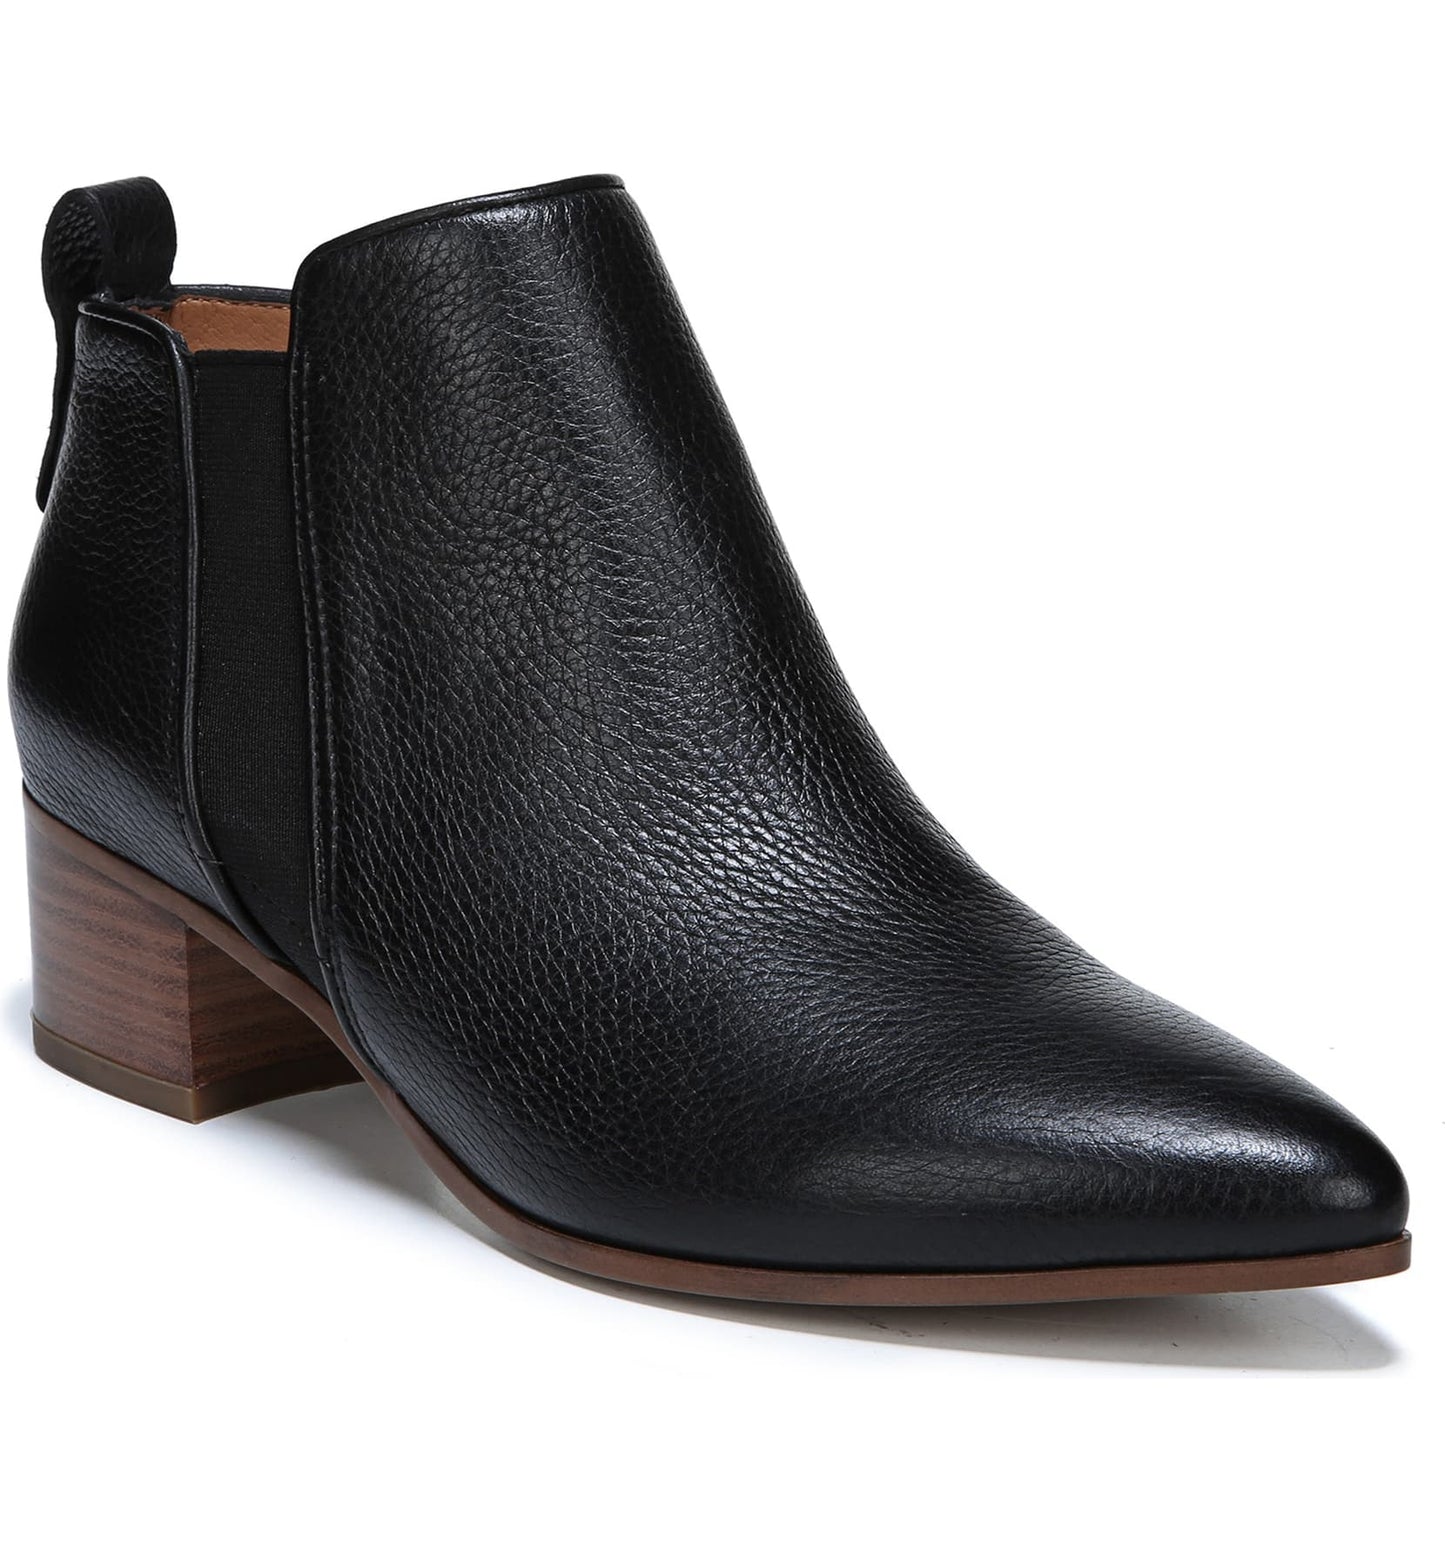 Jollie Black Leather Franco Sarto Ankle Boot